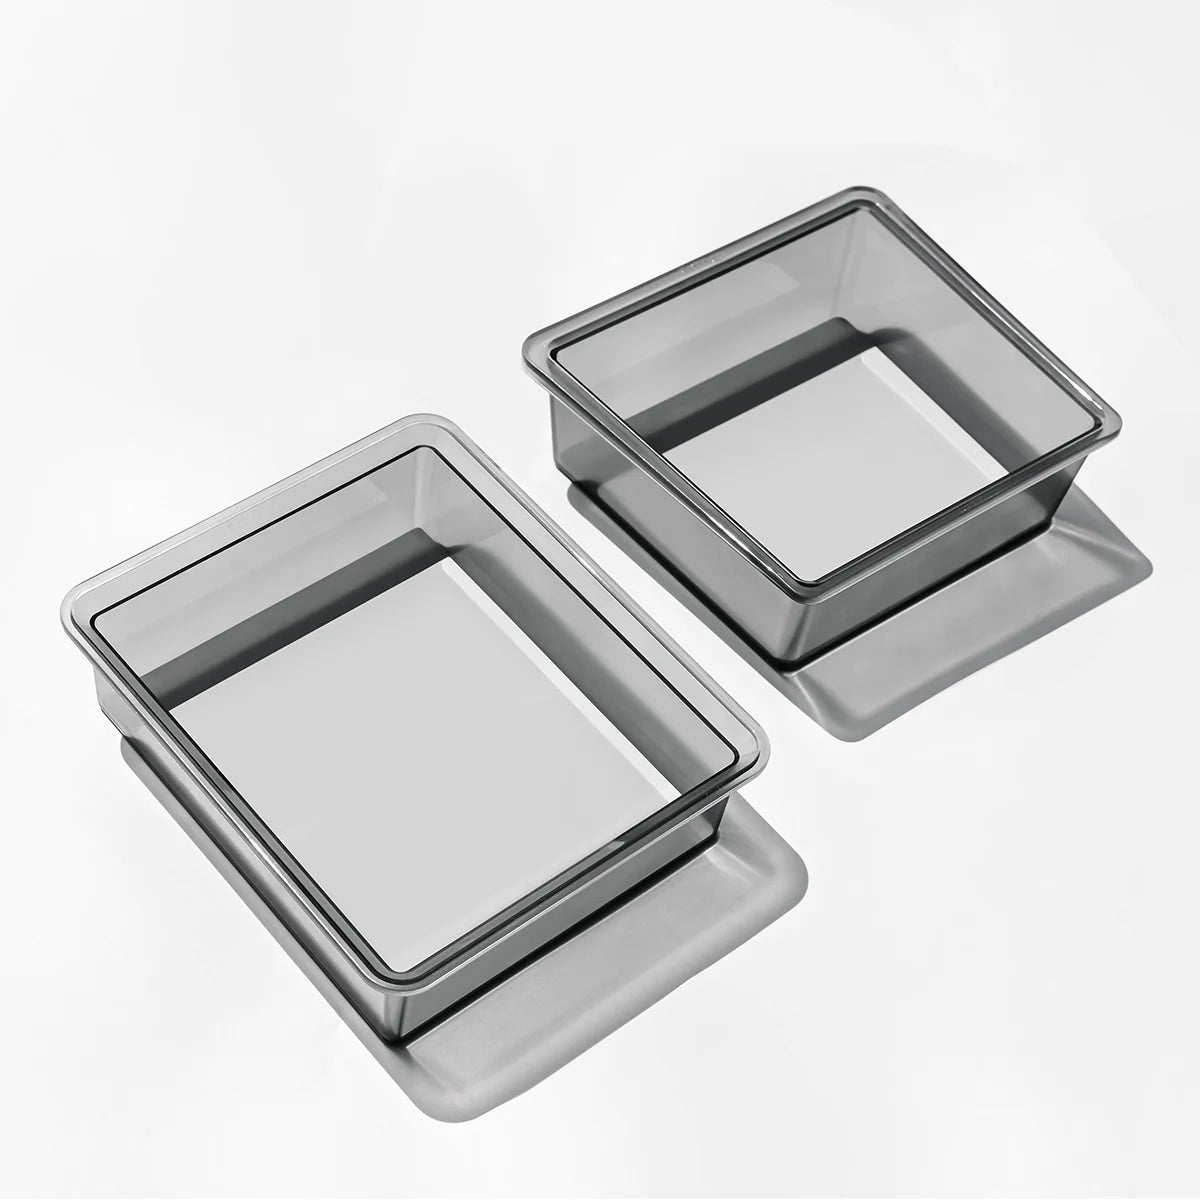 TPARTS Model 3/Y 中控煙灰半透明儲物盒